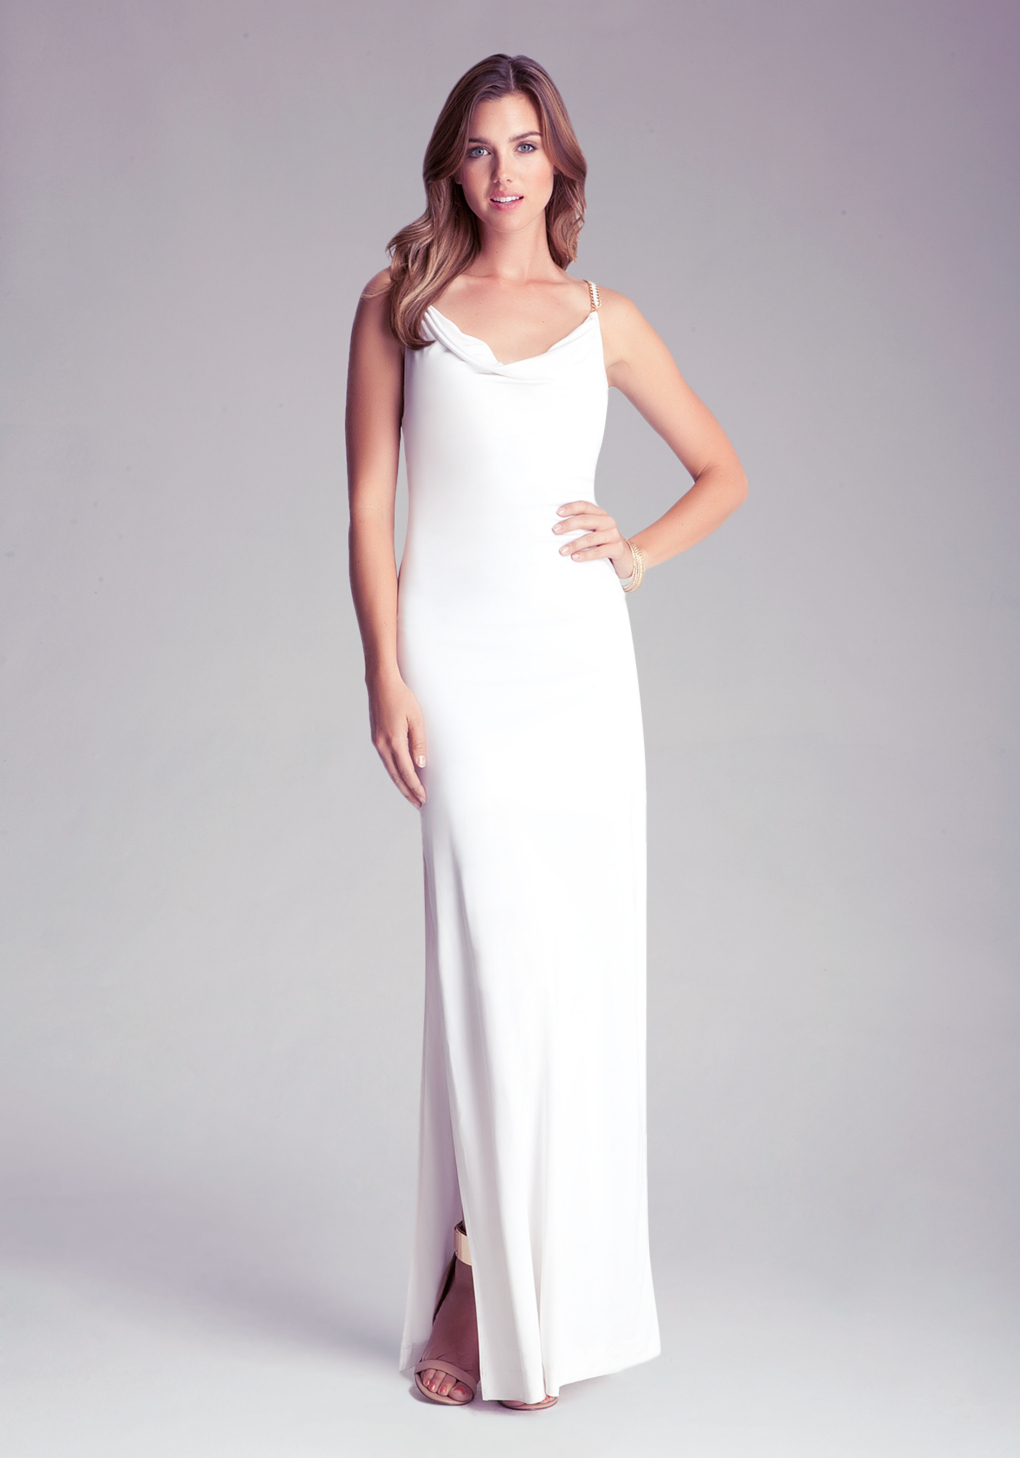 Bebe Long Cowl Neck Dress in White | Lyst